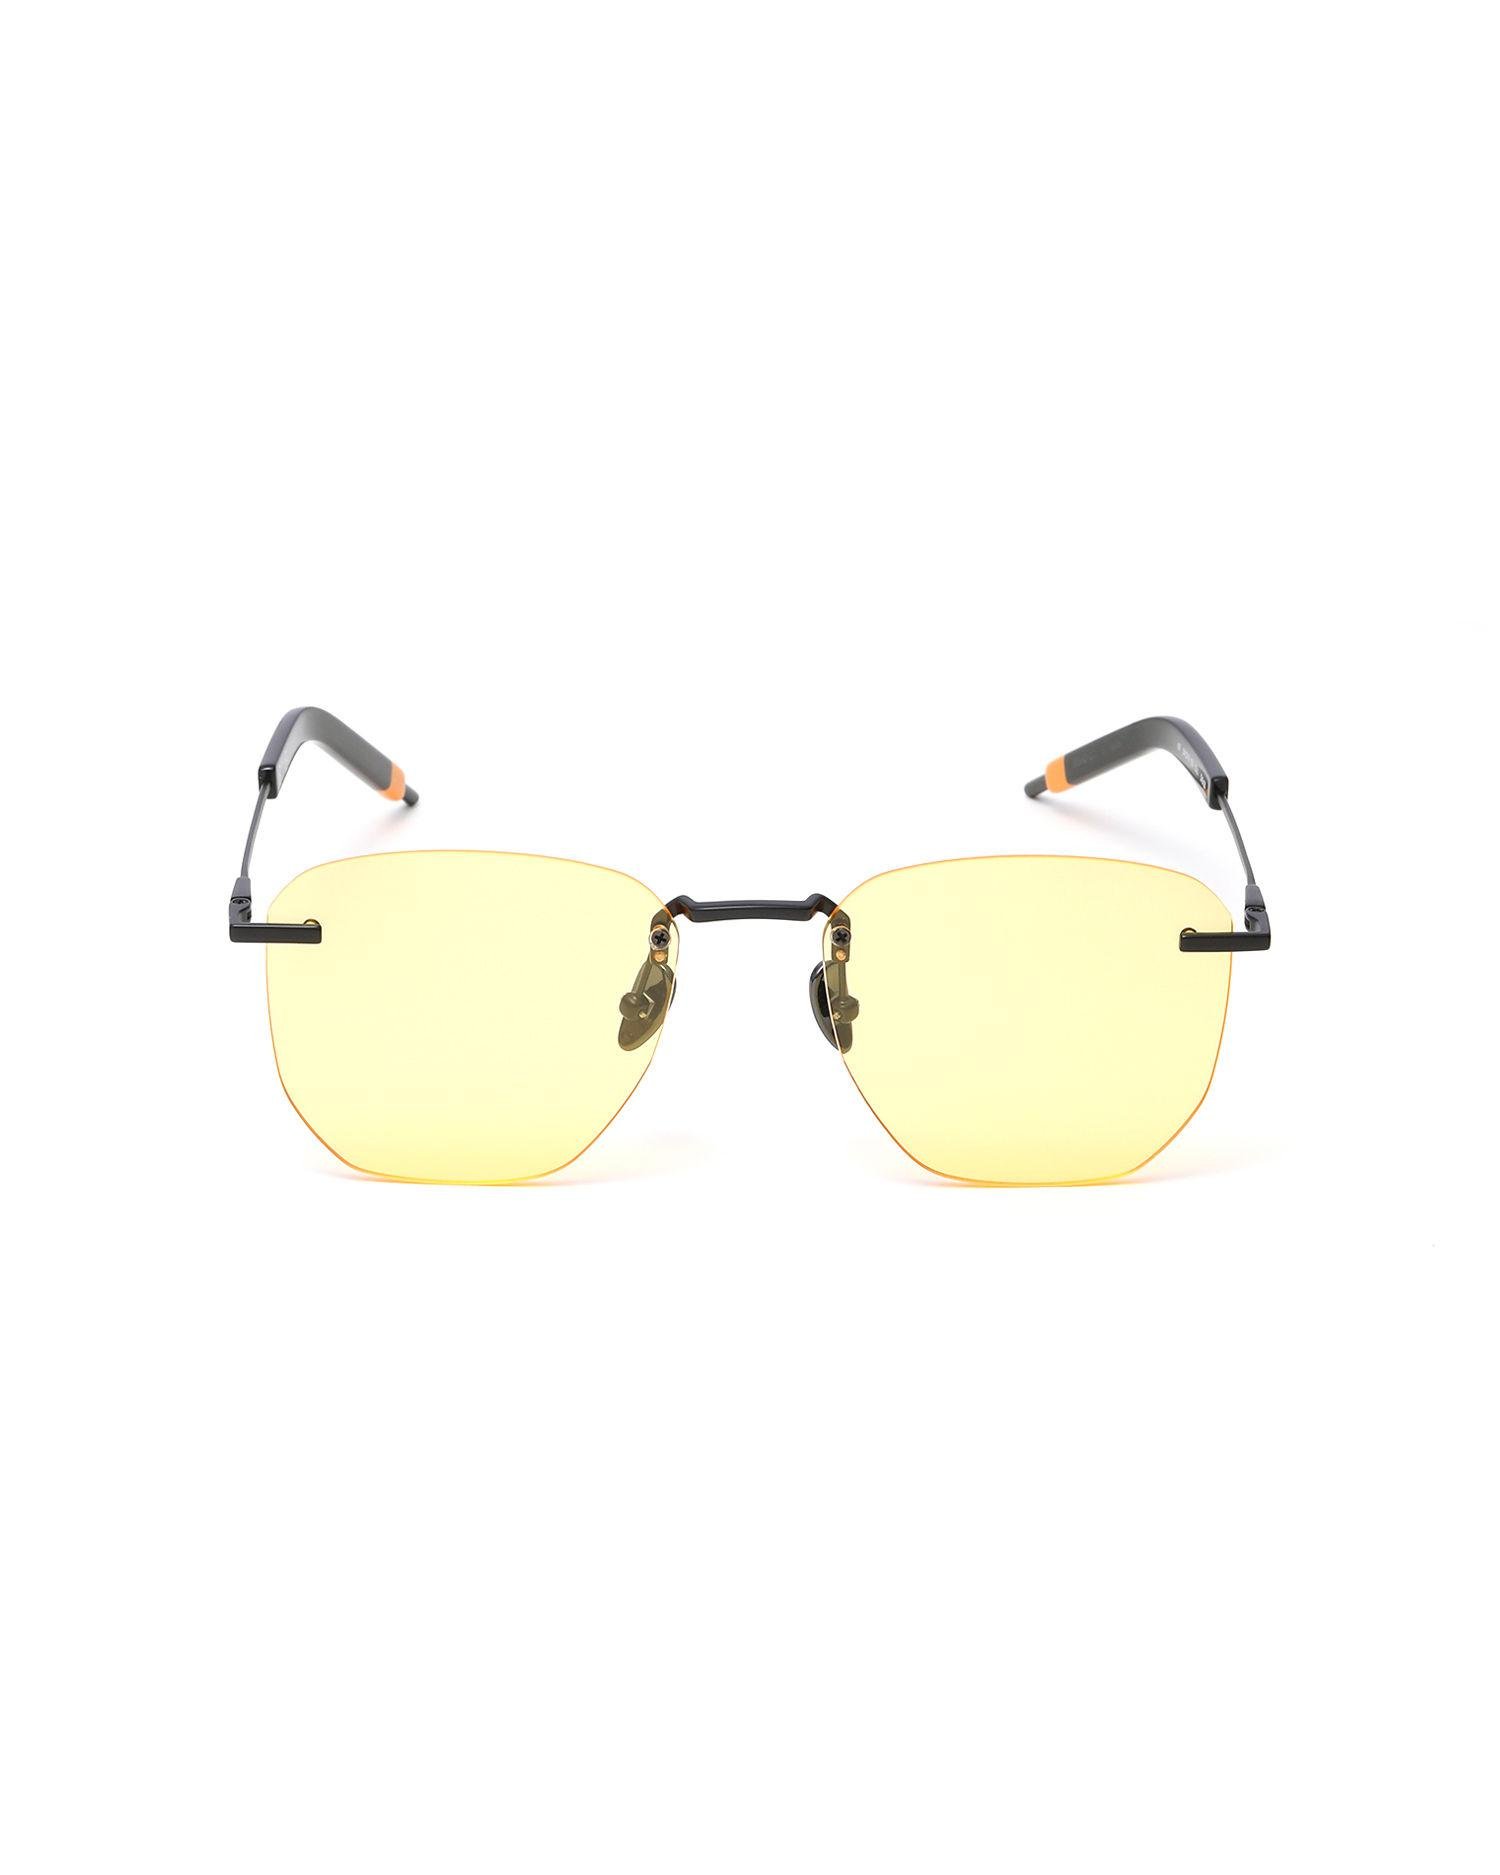 Frameless sunglasses by BIAS